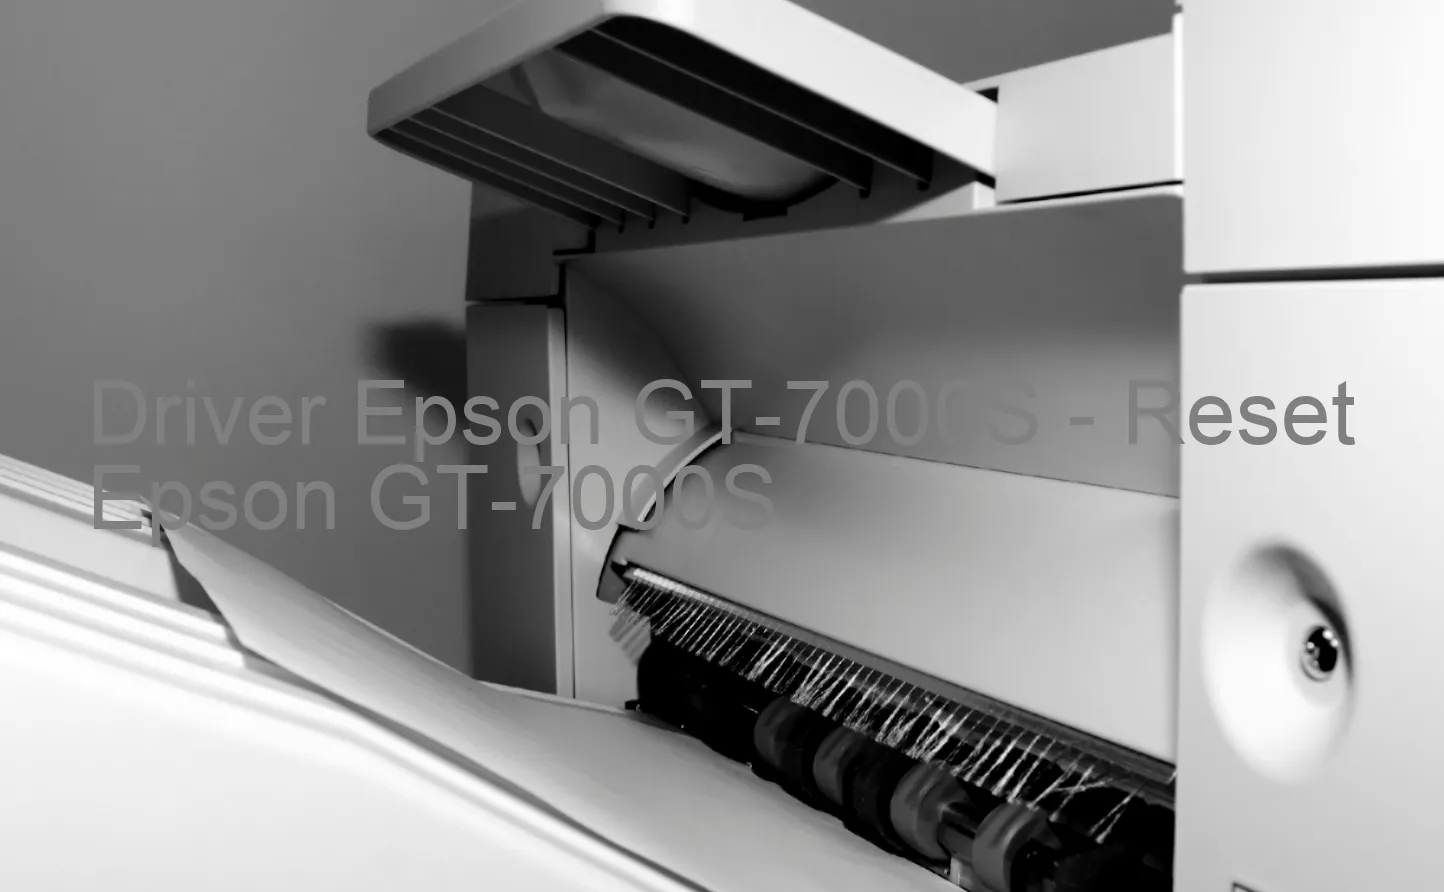 Epson GT-7000Sのドライバー、Epson GT-7000Sのリセットソフトウェア